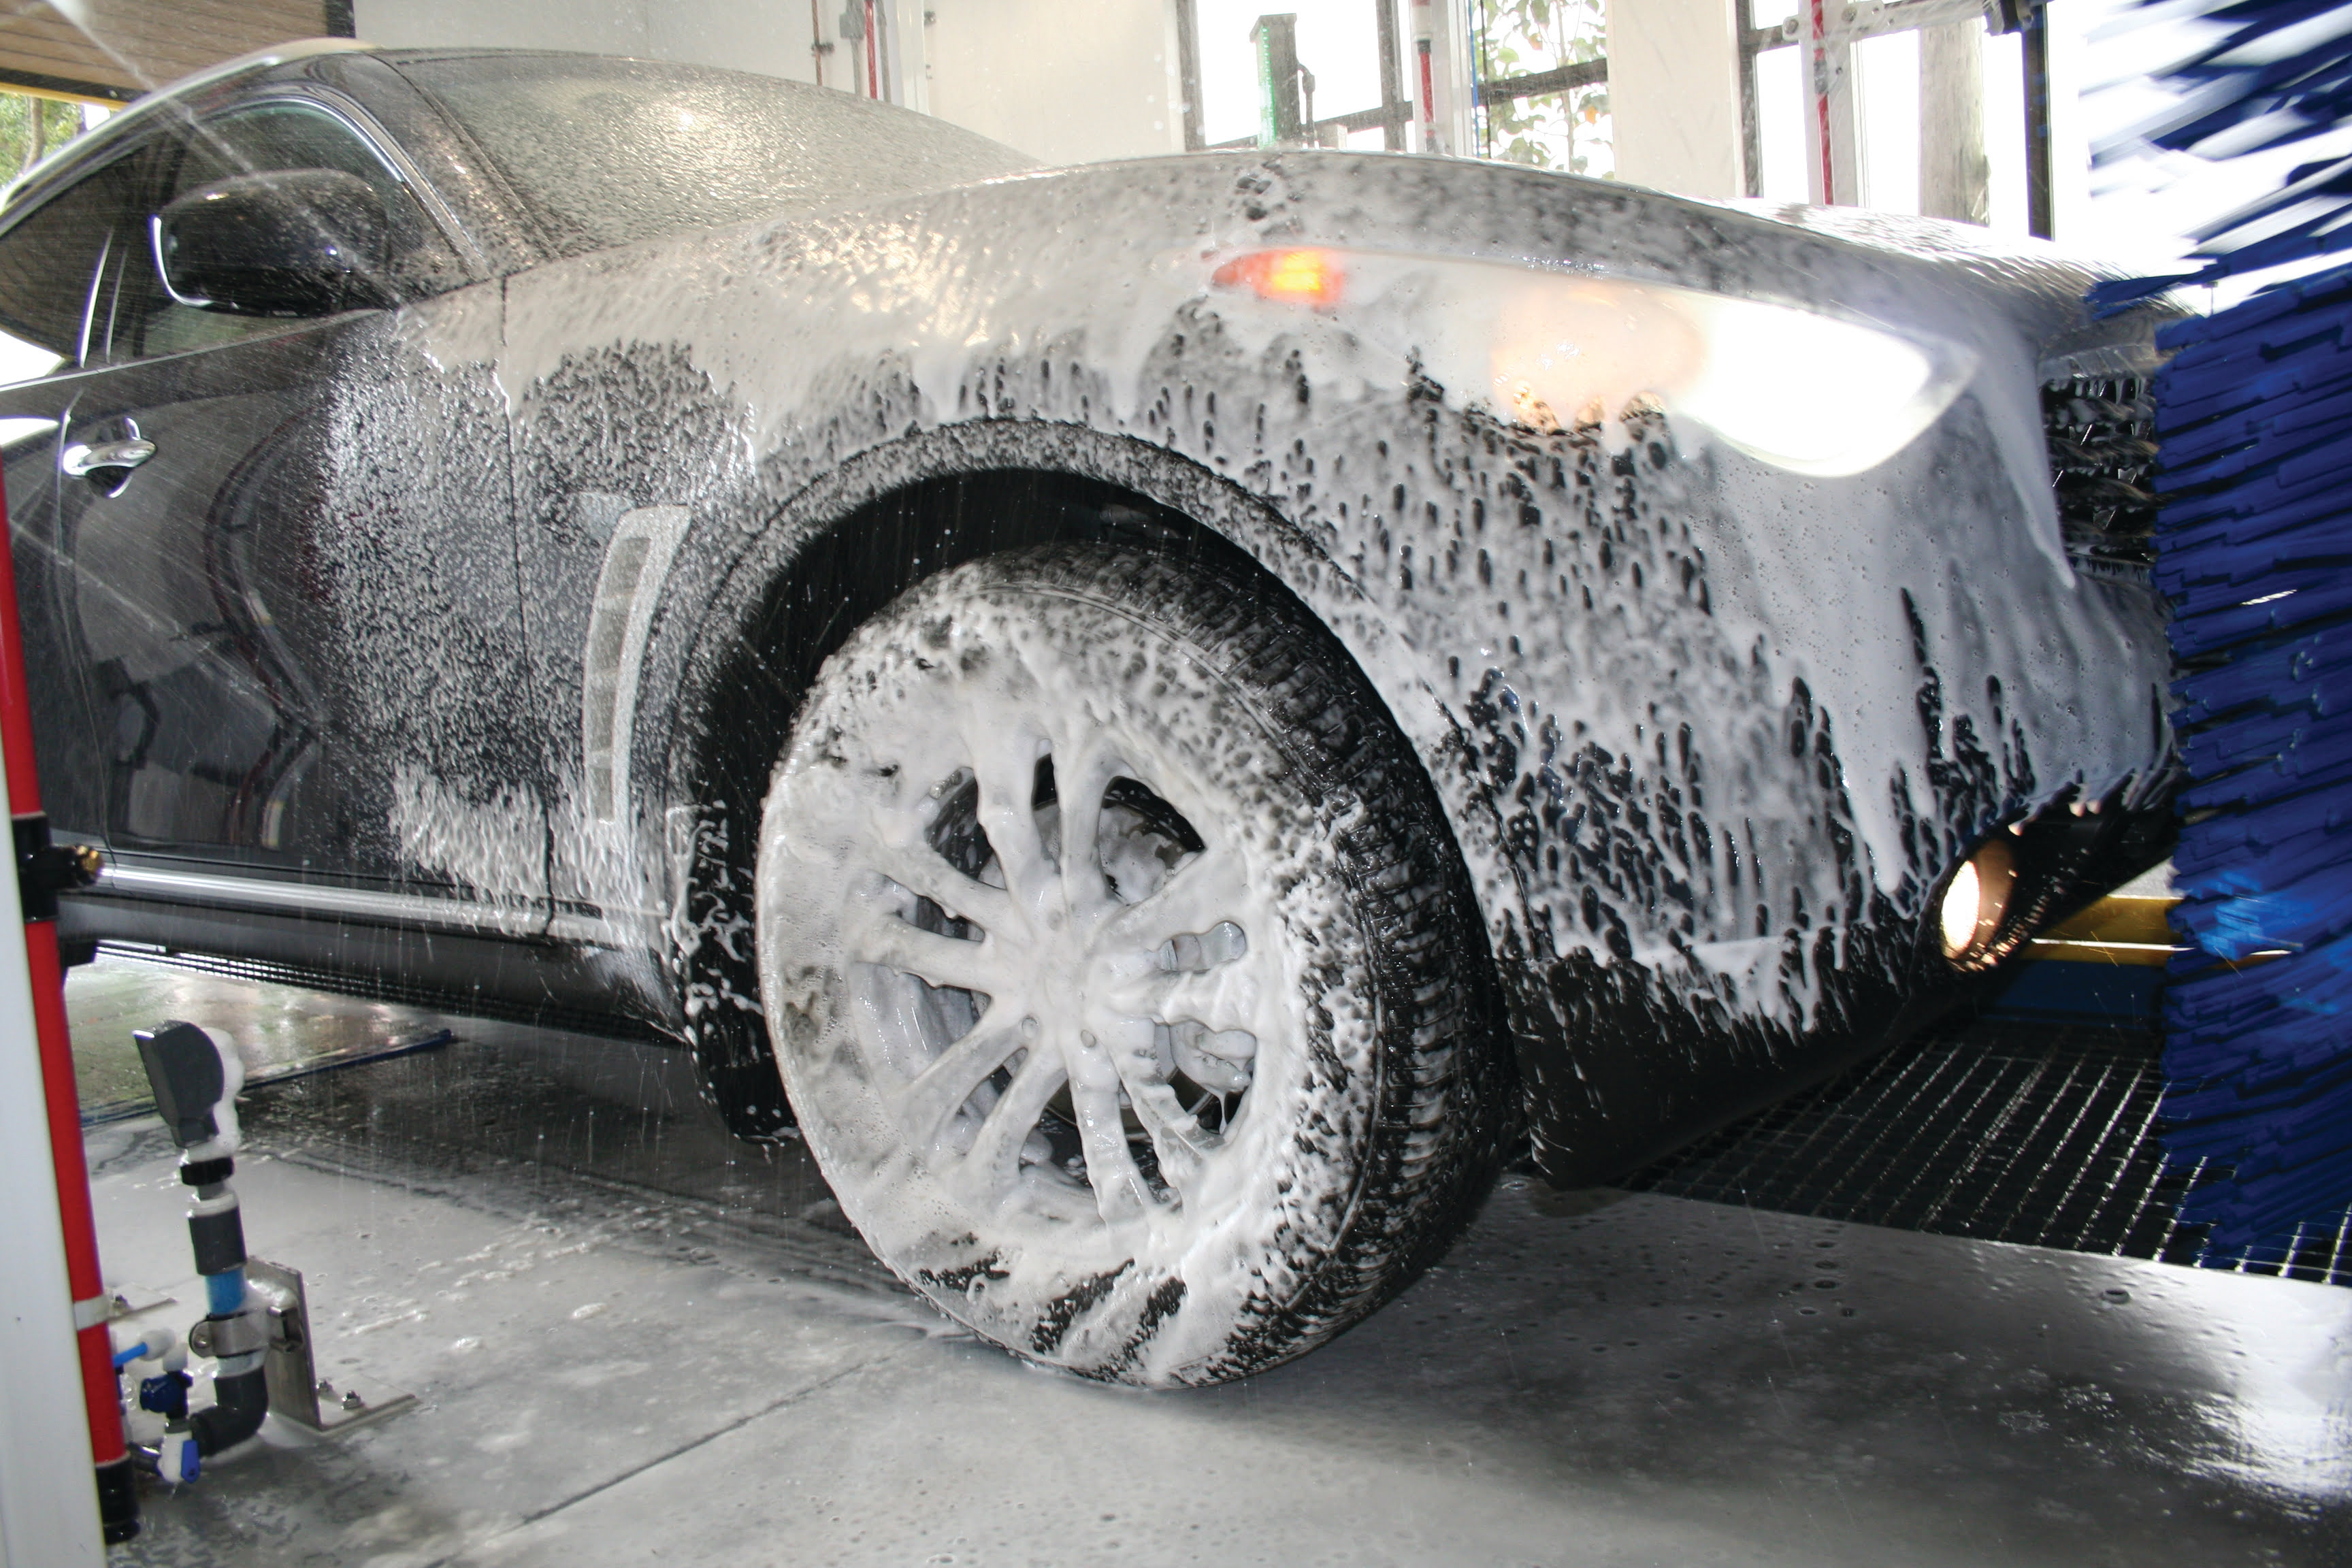 Ancillary Car Wash Supplies = Increased Revenue